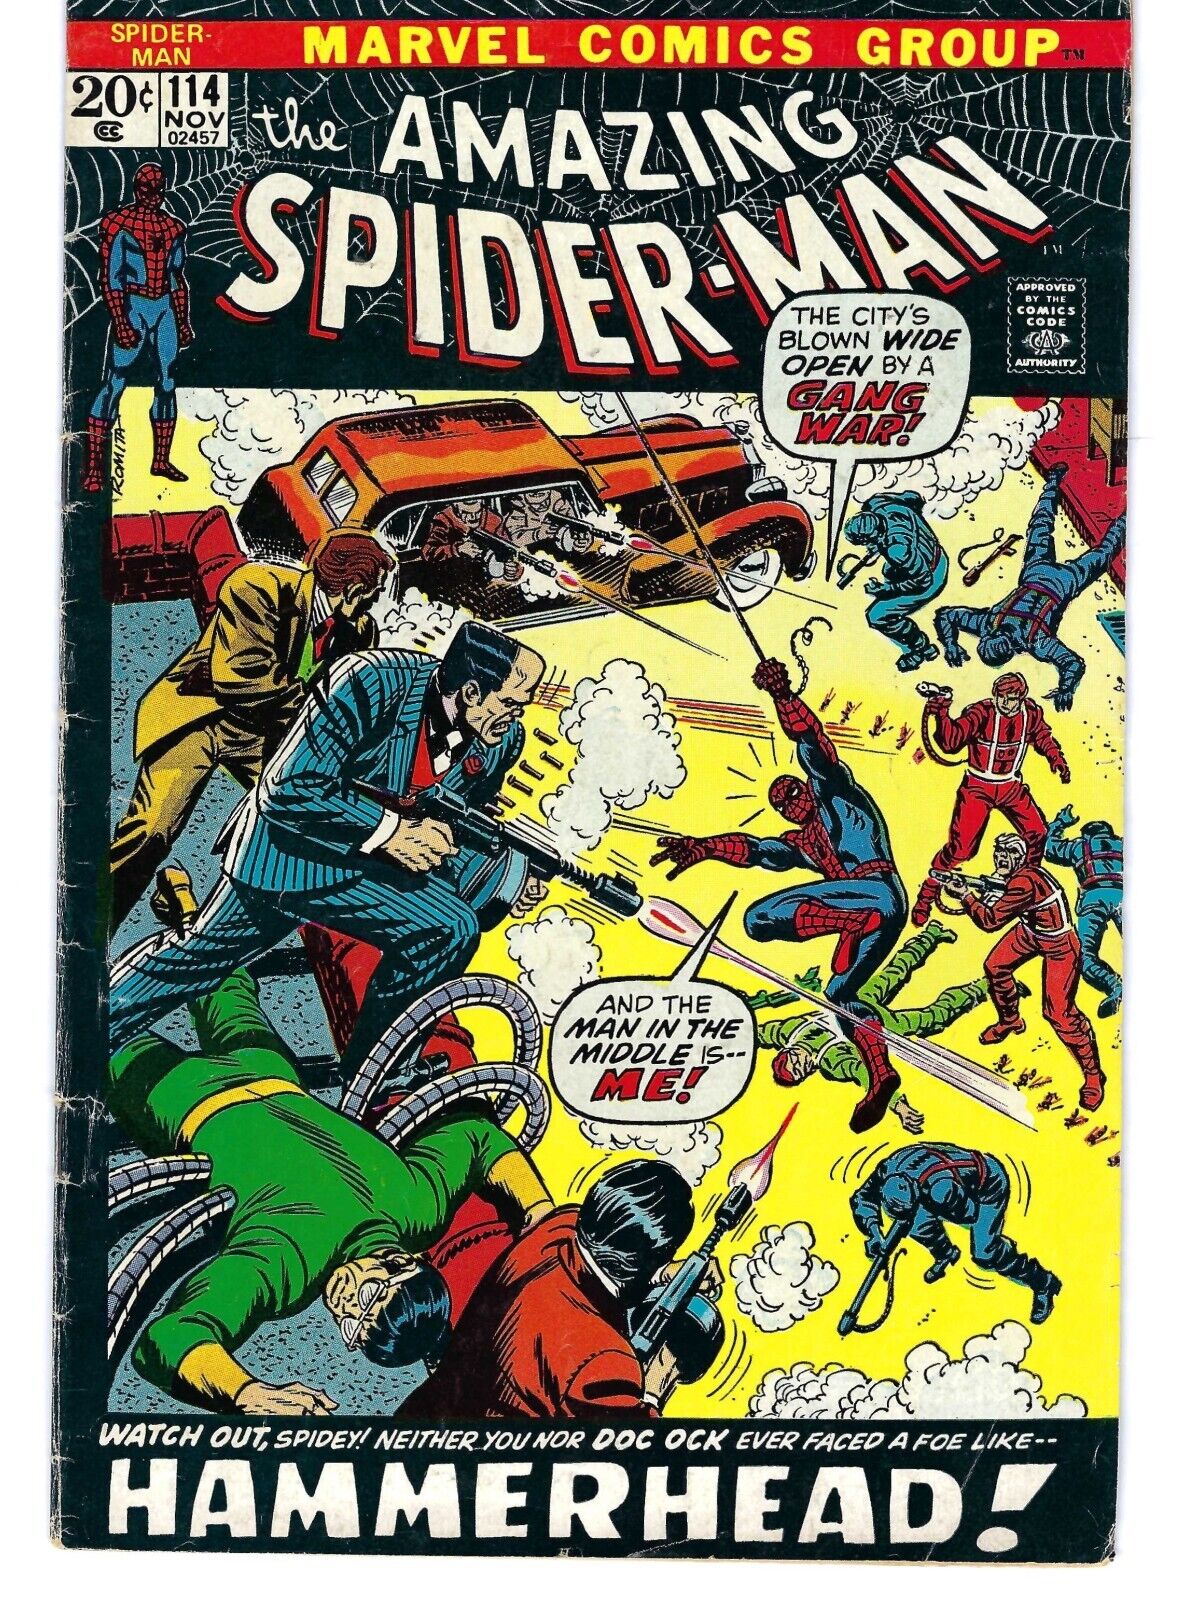 The Amazing Spider-Man #114 Marvel Comics Group November 1972